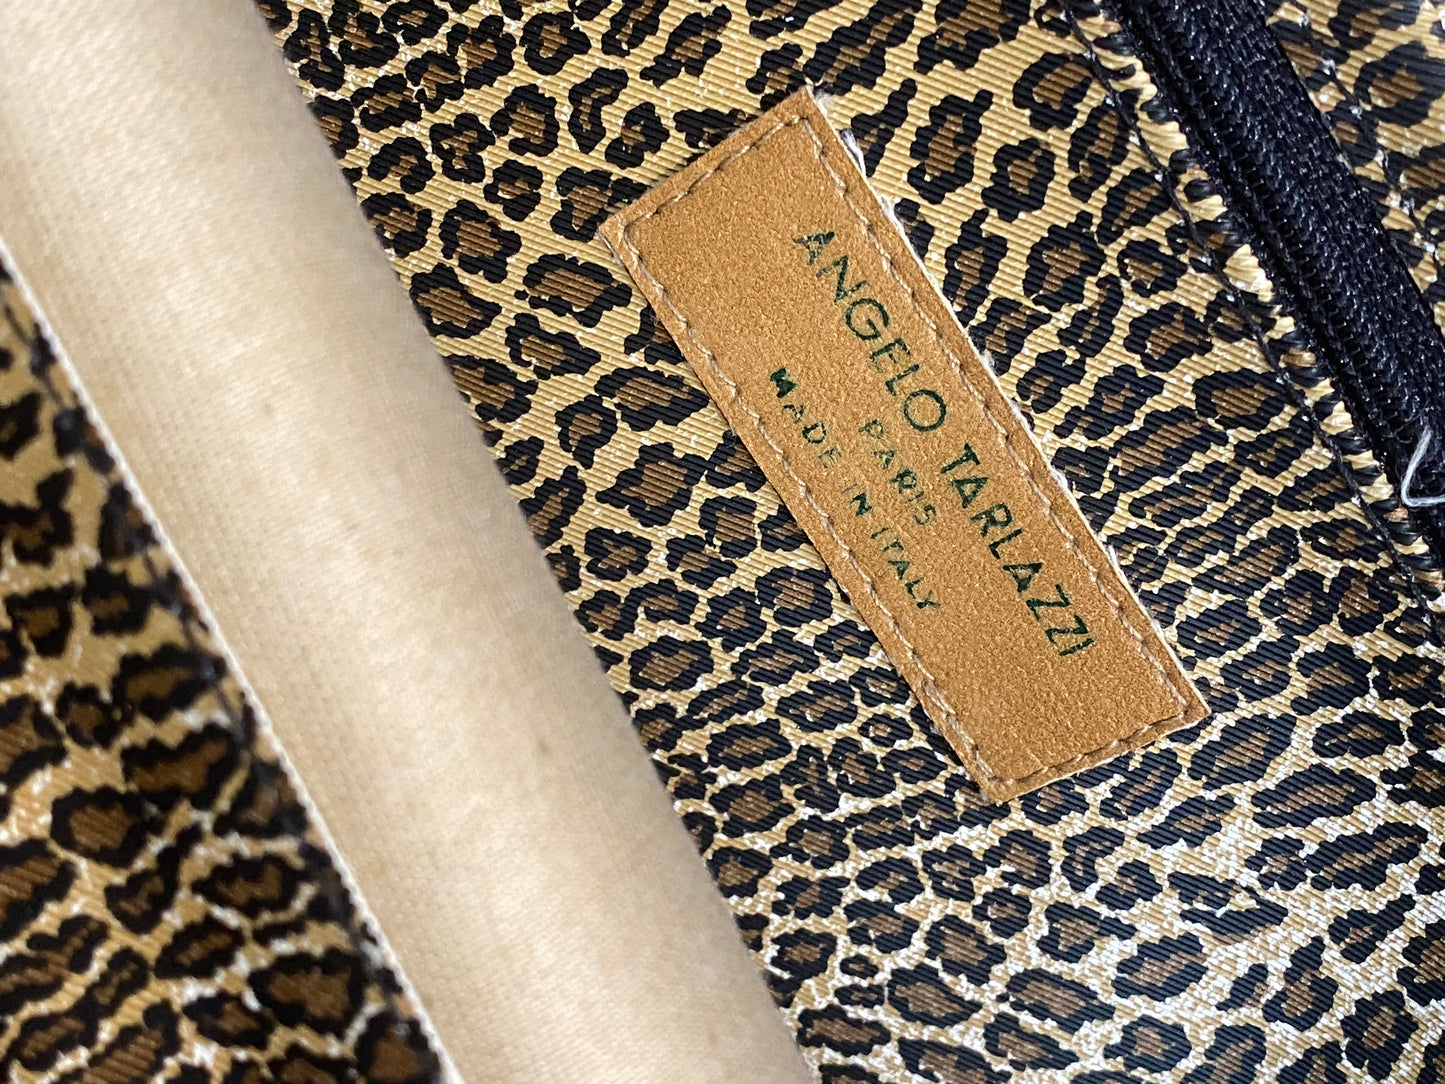 Angelo Tarlazzi cheetah canvas/ tan leather folder bag, NOS 80s